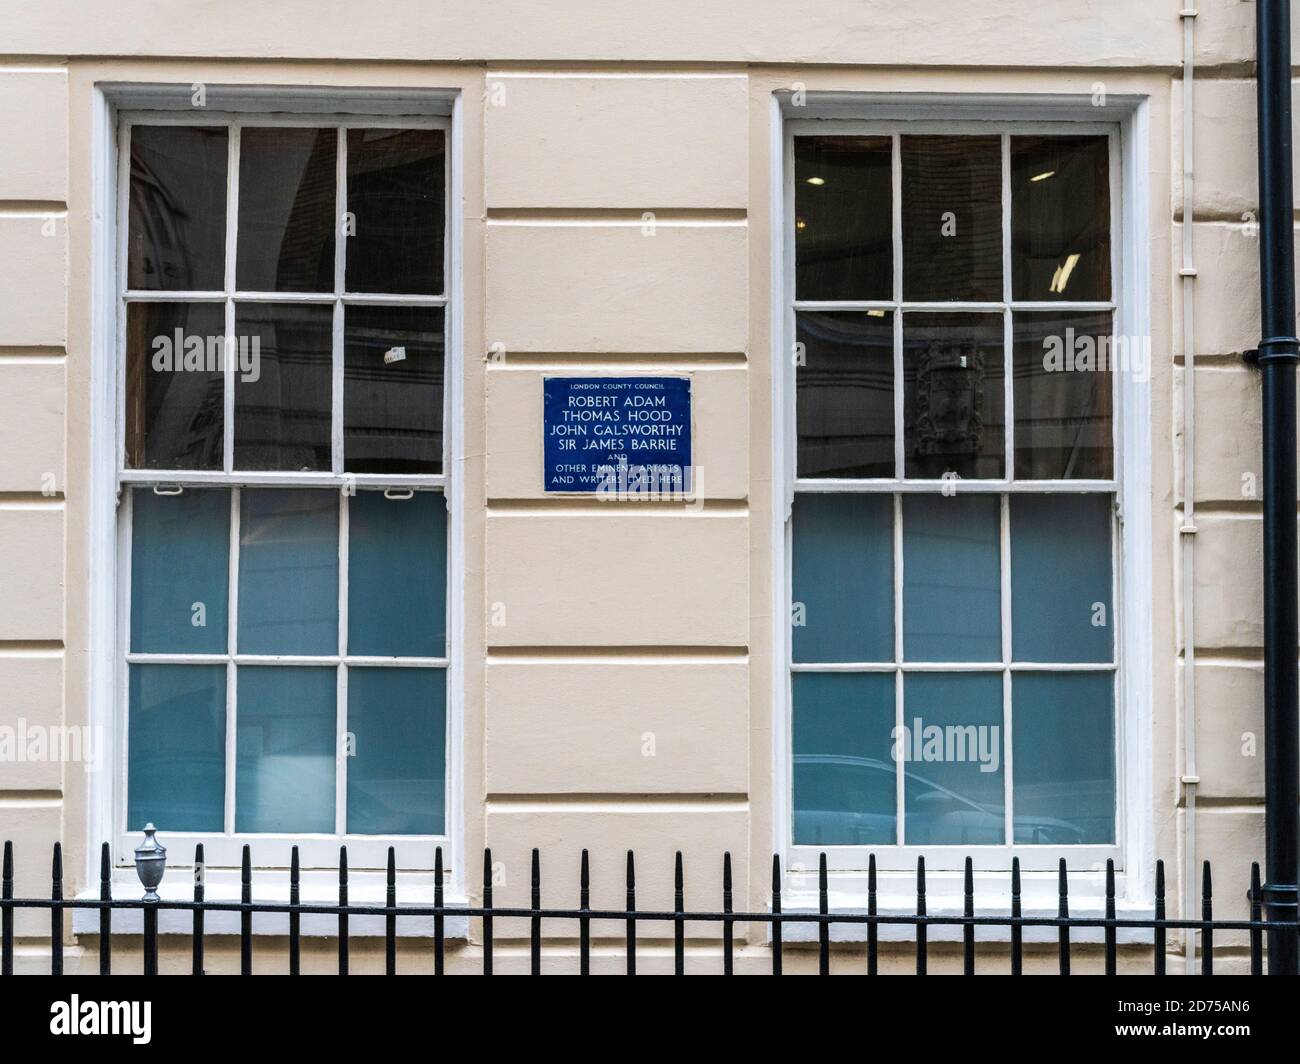 London County Council Blaue Plakette für Robert Adam, Thomas Hood, John Galsworthy & Sir James Barrie, lebte in der Robert Street 1-3, Charing Cross, London. Stockfoto